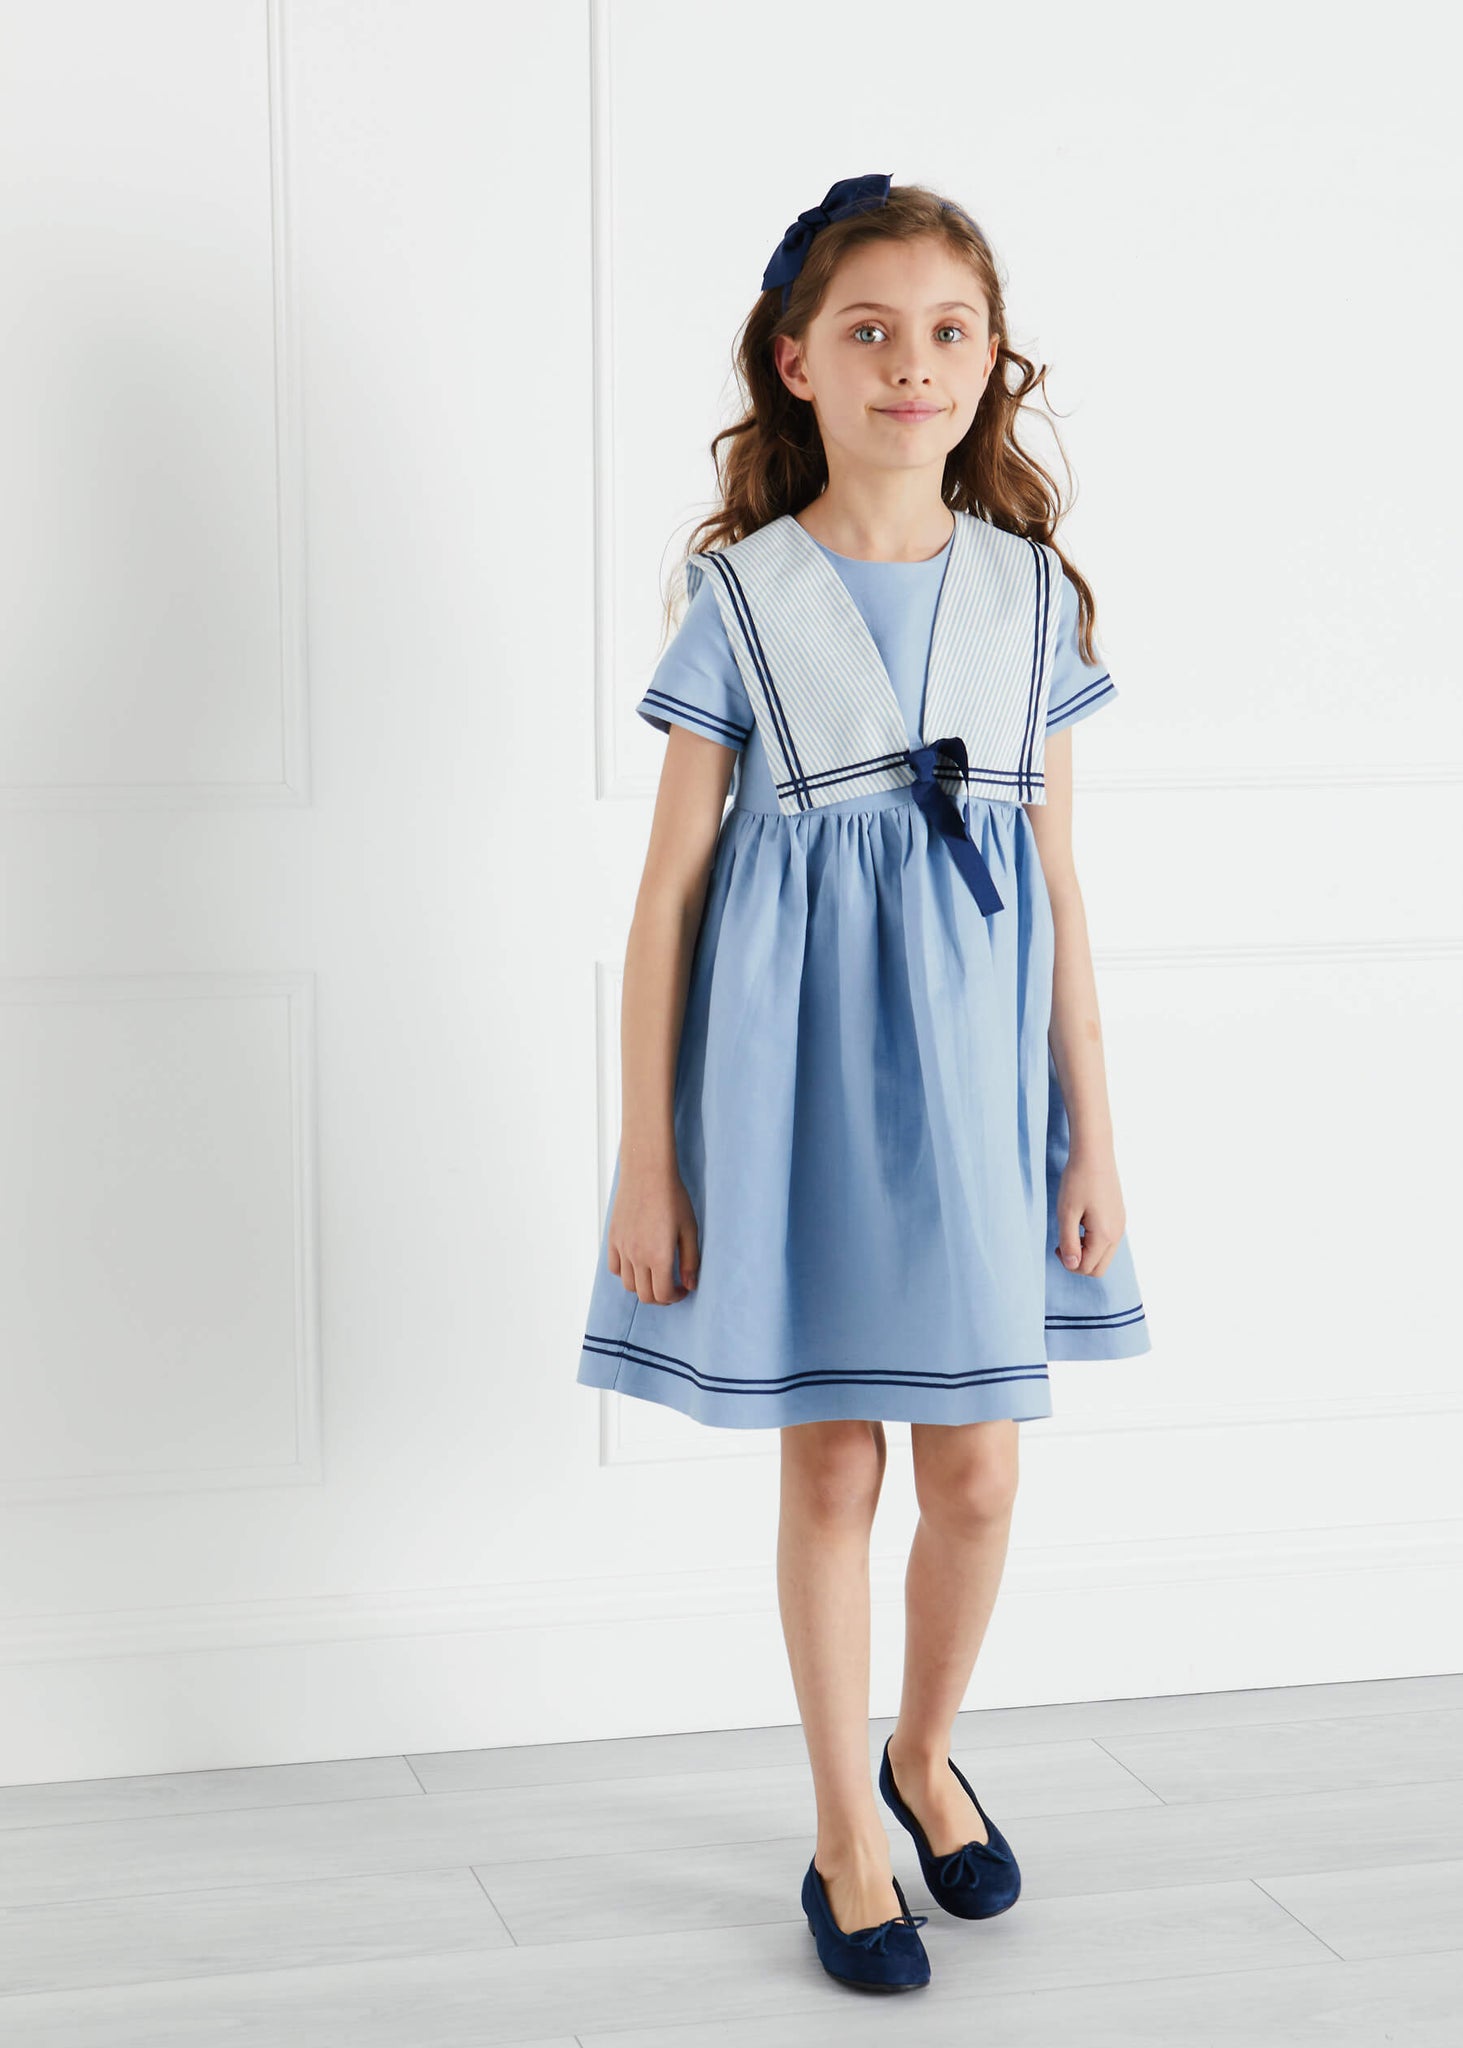 Stripe Collar Mariner Short Sleeve Dress in Blue (12mths-10yrs) Dresses  from Pepa London